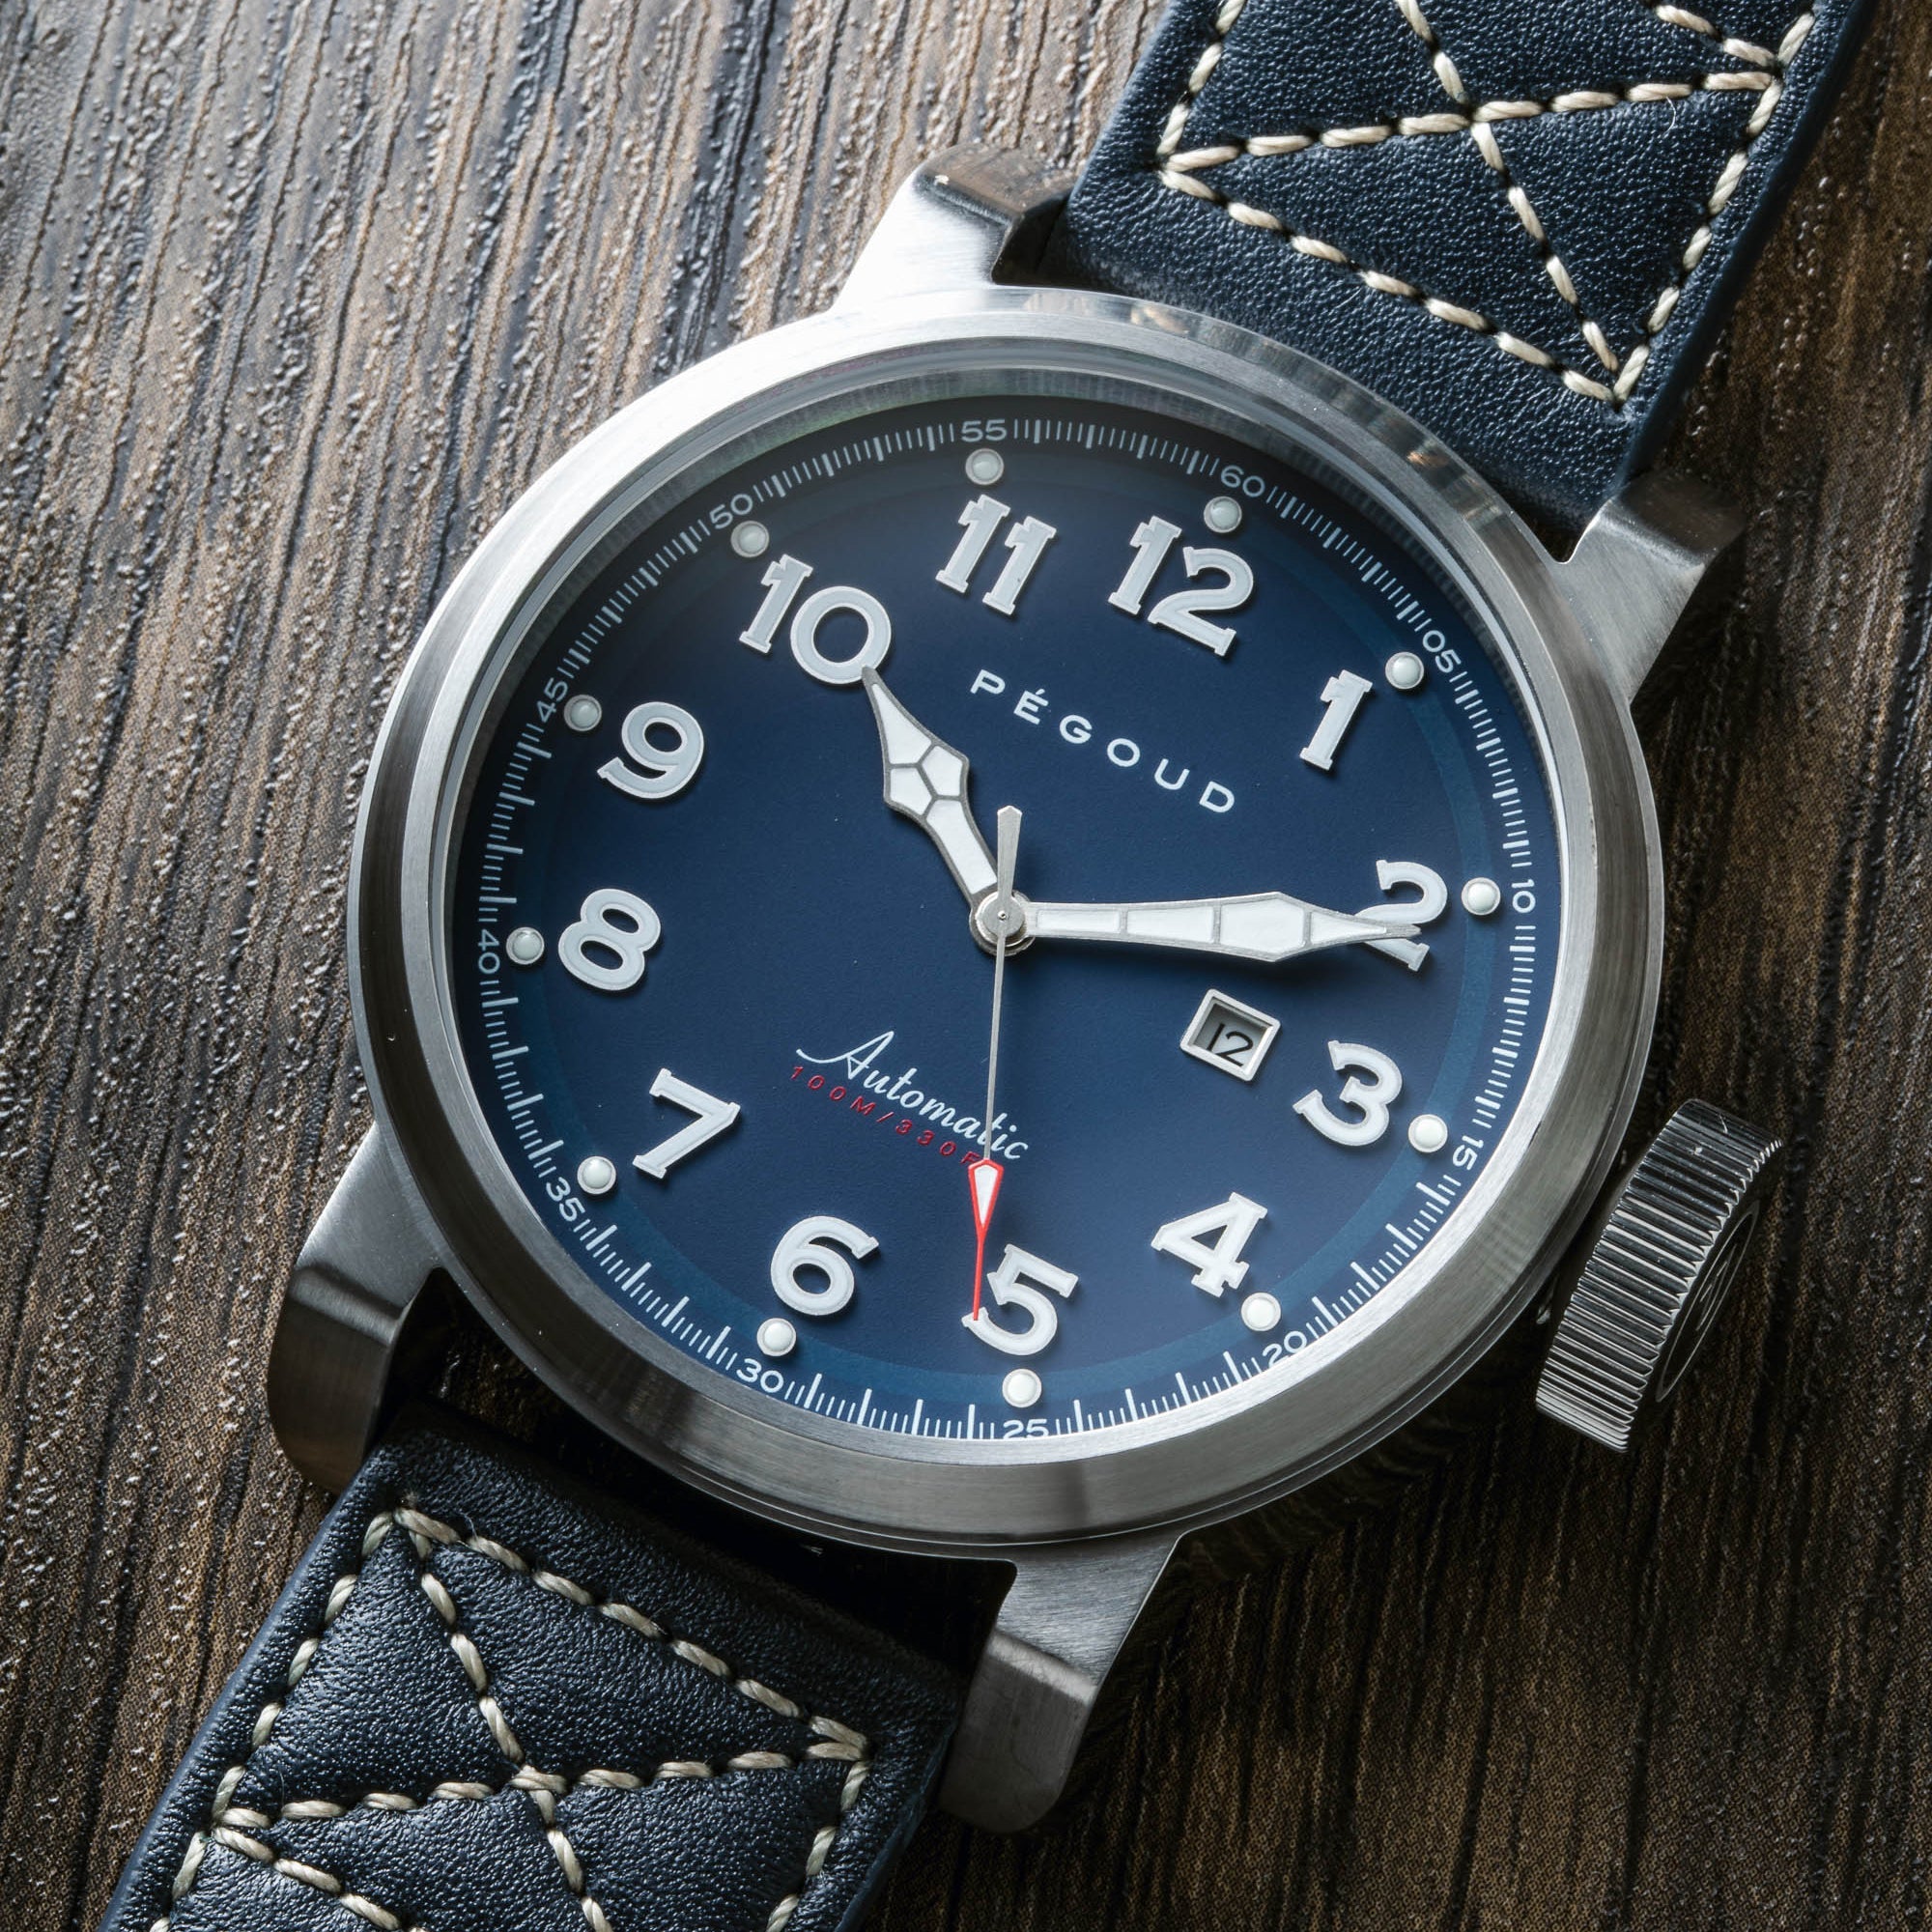 PEGOUD Pegoud Celestin Japanese Automatic Men's Oxford Blue Watch PG-9013-03